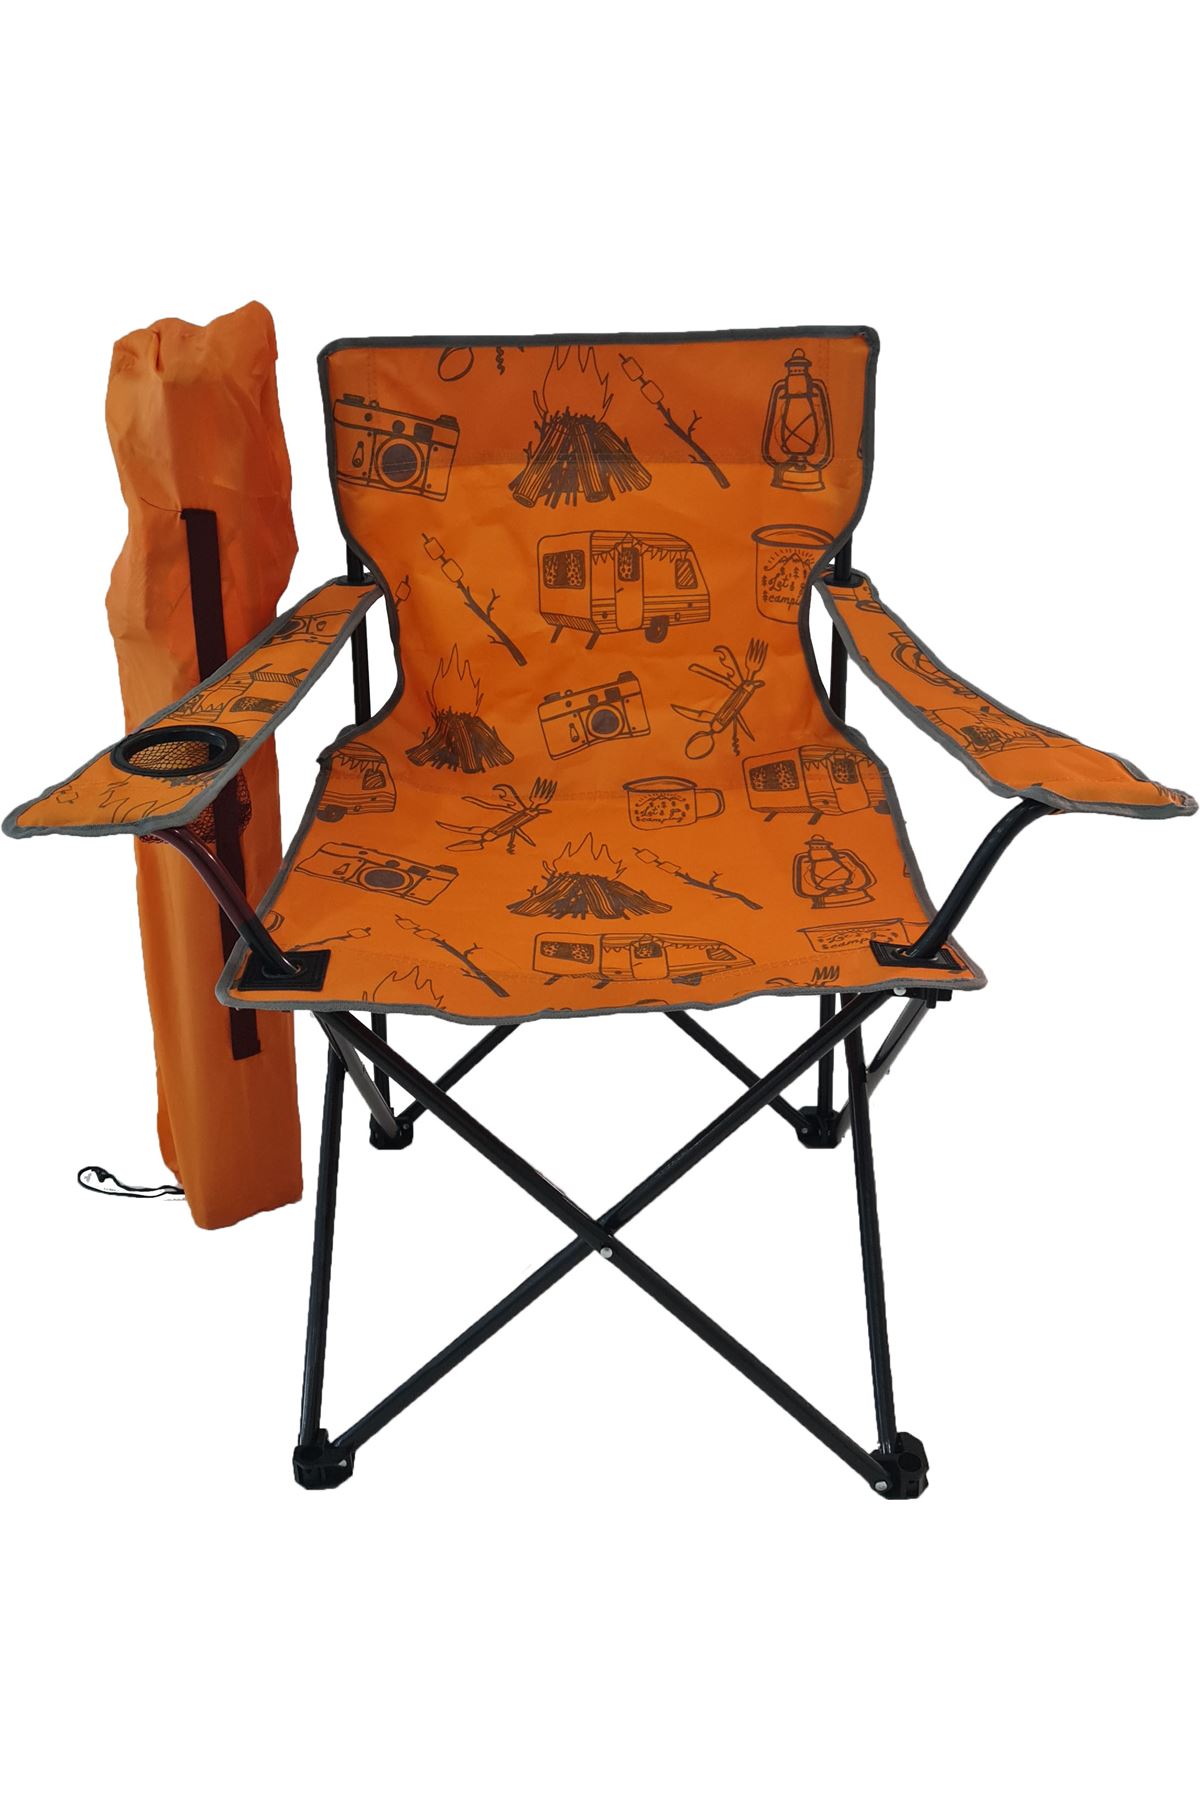 Bofigo 3 Pcs Camping Chair Folding Chair Garden Chair Picnic Beach Chair Patterned Mixed